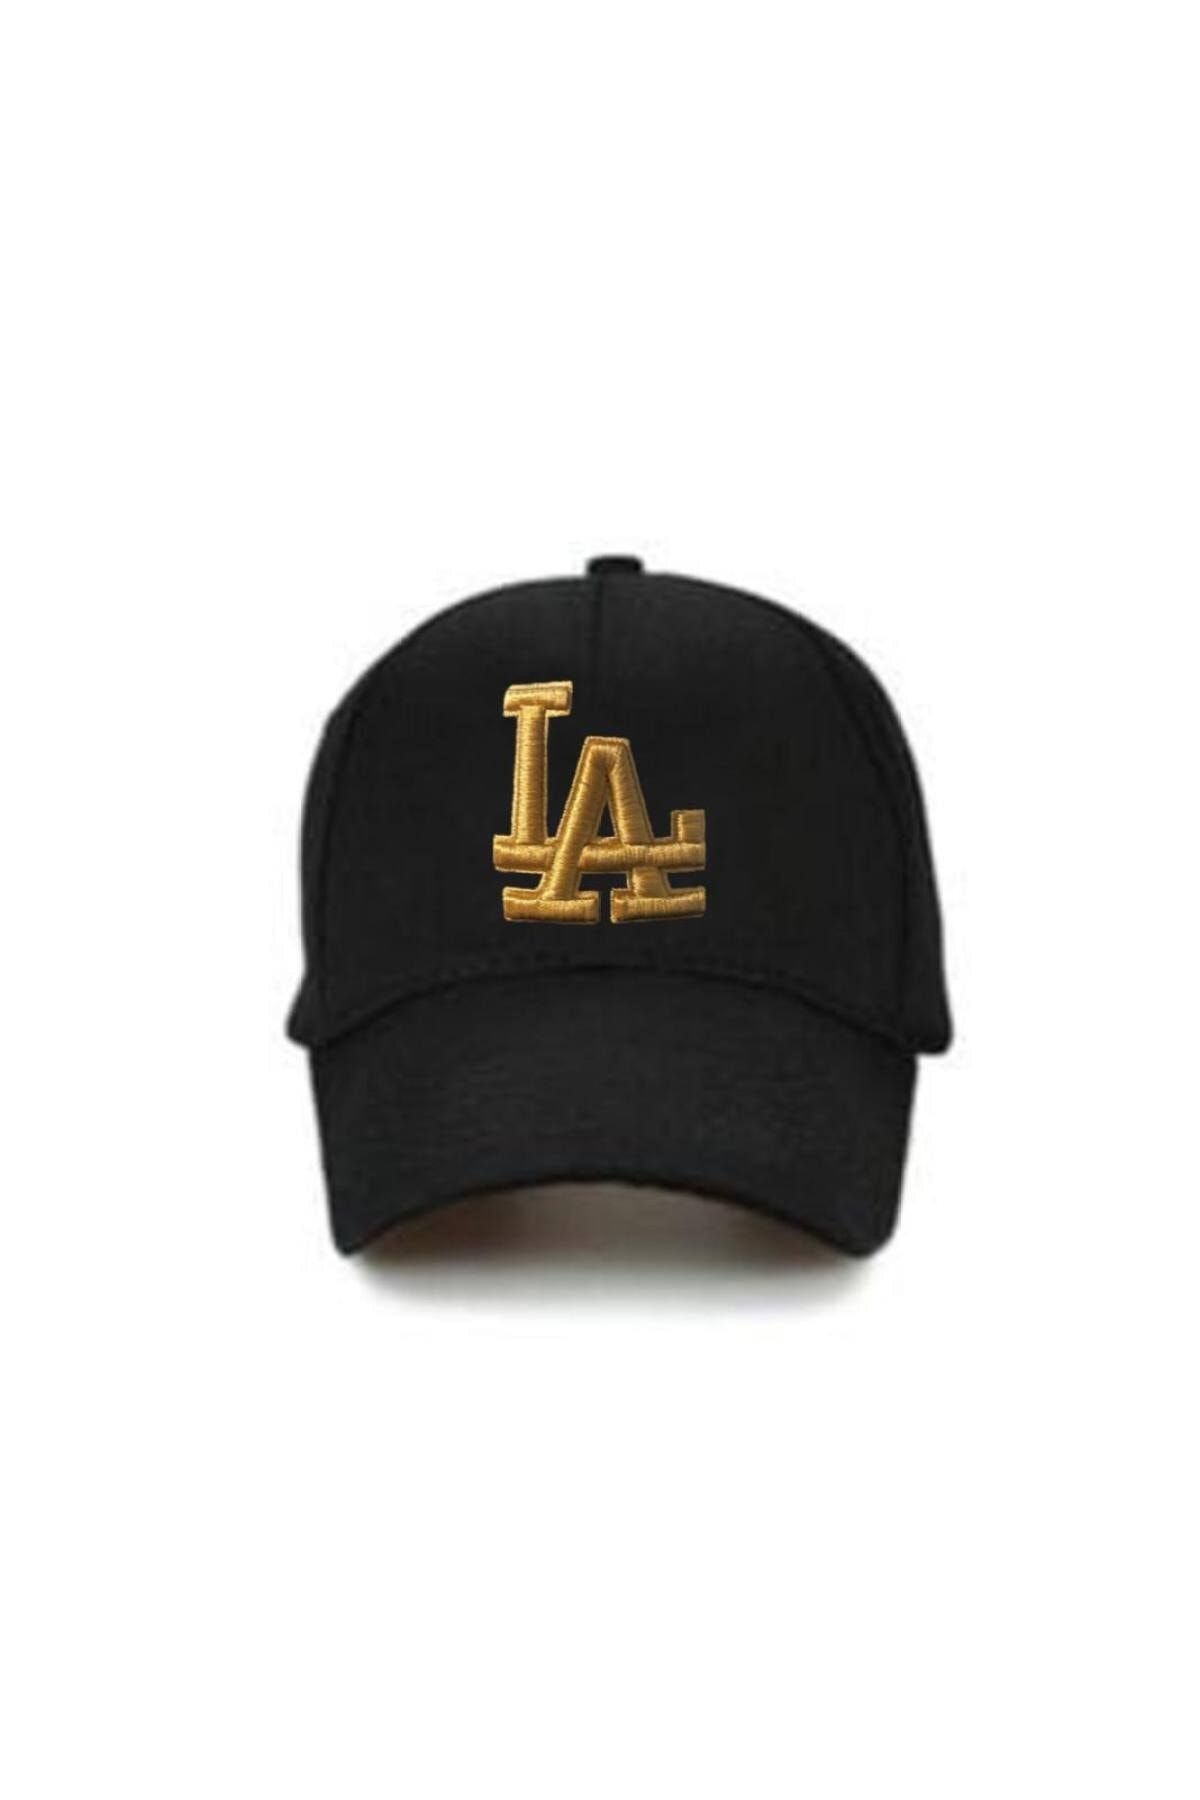 Nacar La Los Angeles Şapka Unisex Siyah Şapka Altın Nakış